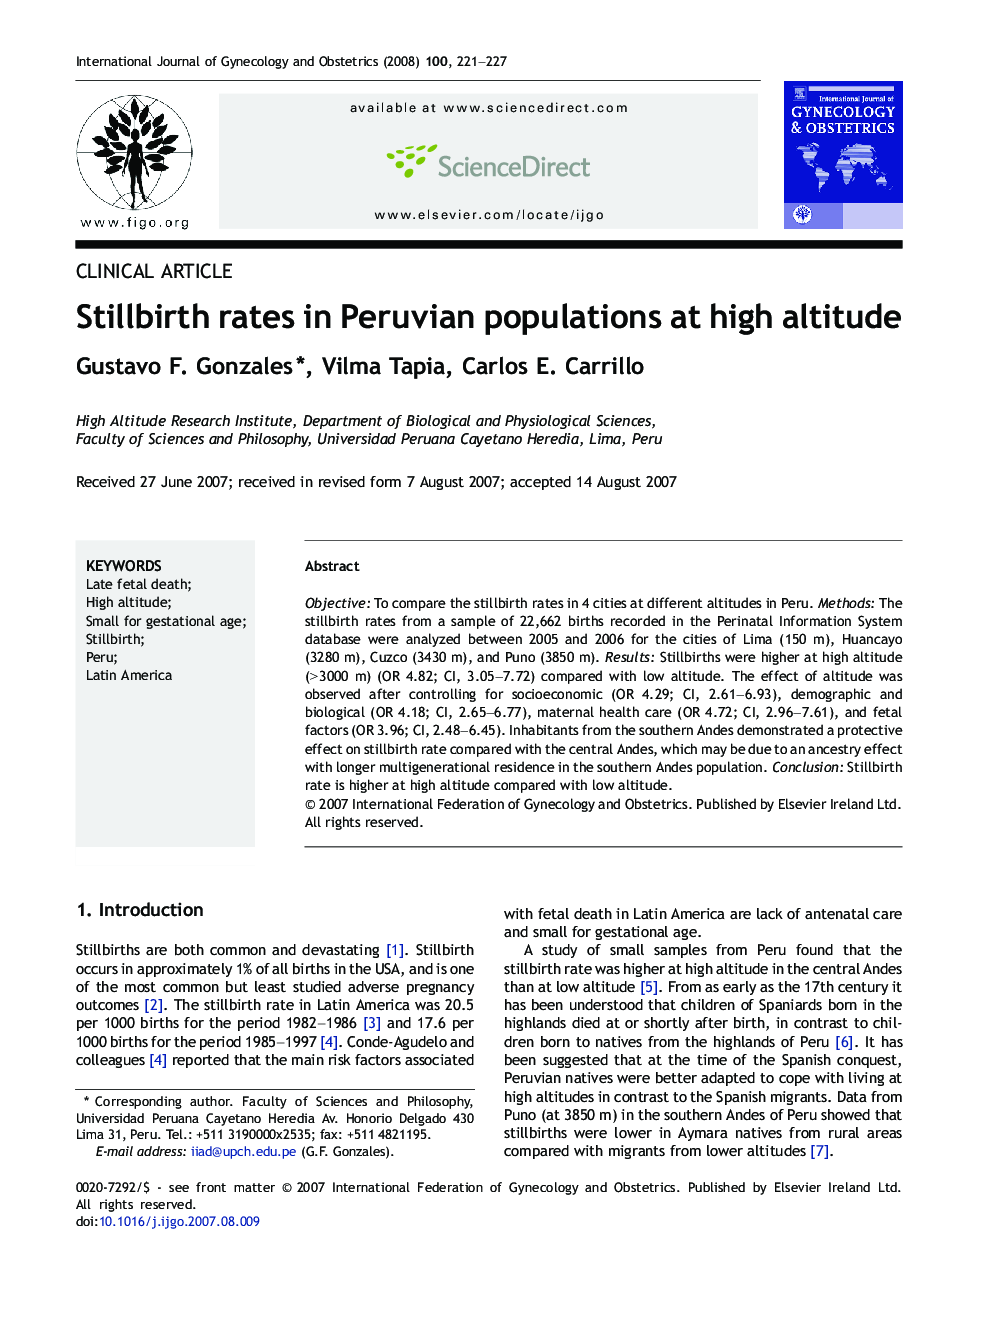 Stillbirth rates in Peruvian populations at high altitude